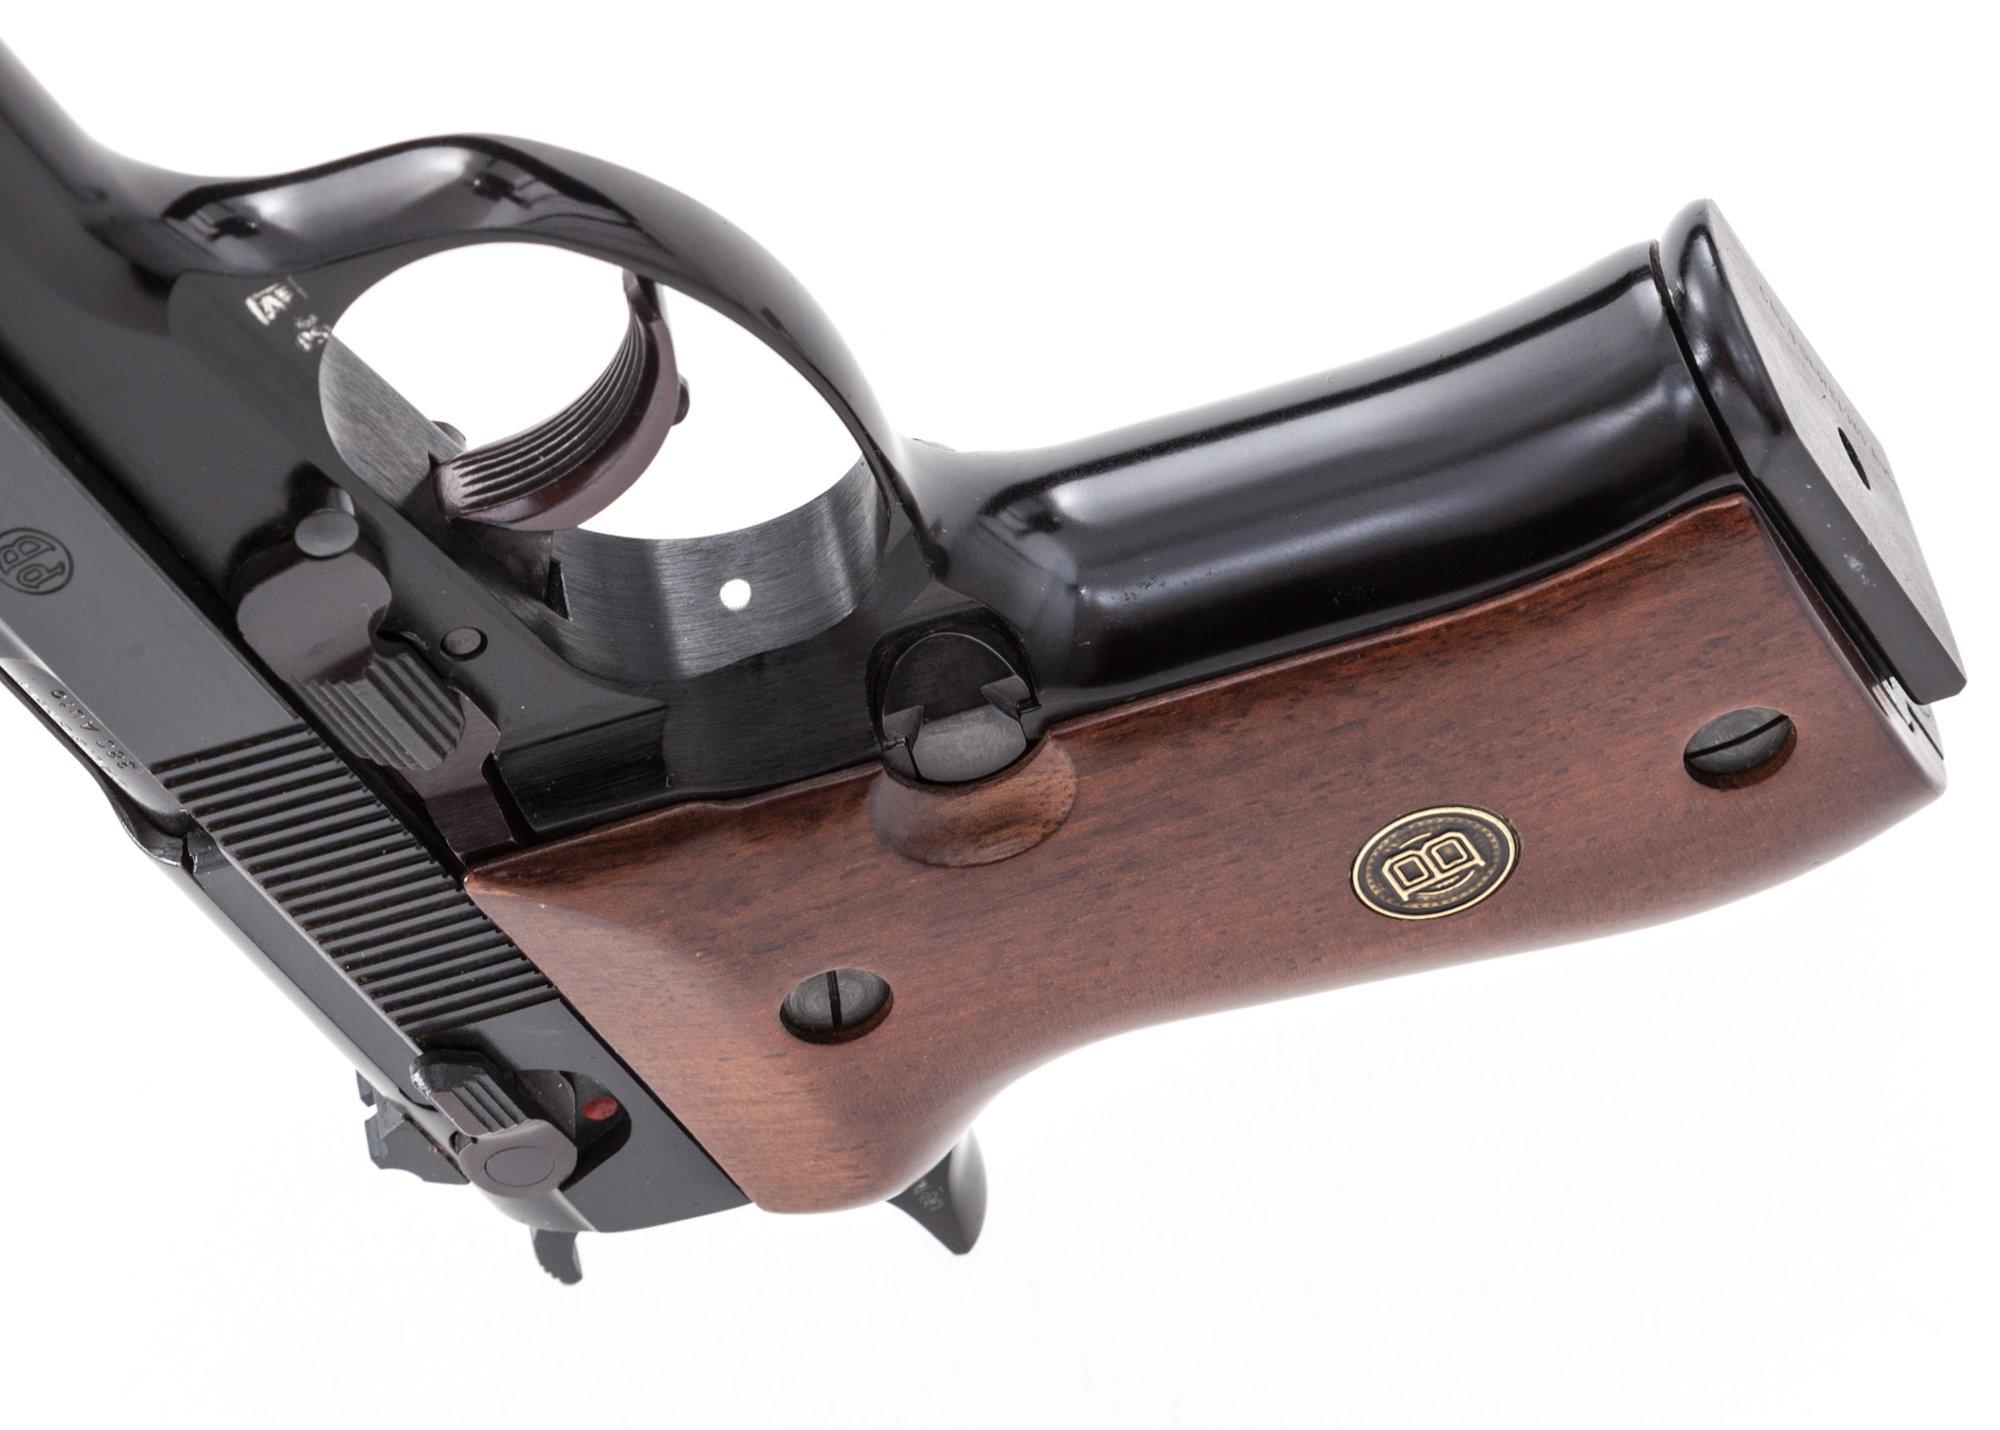 Browning BDA-380 Semi-Automatic Pistol